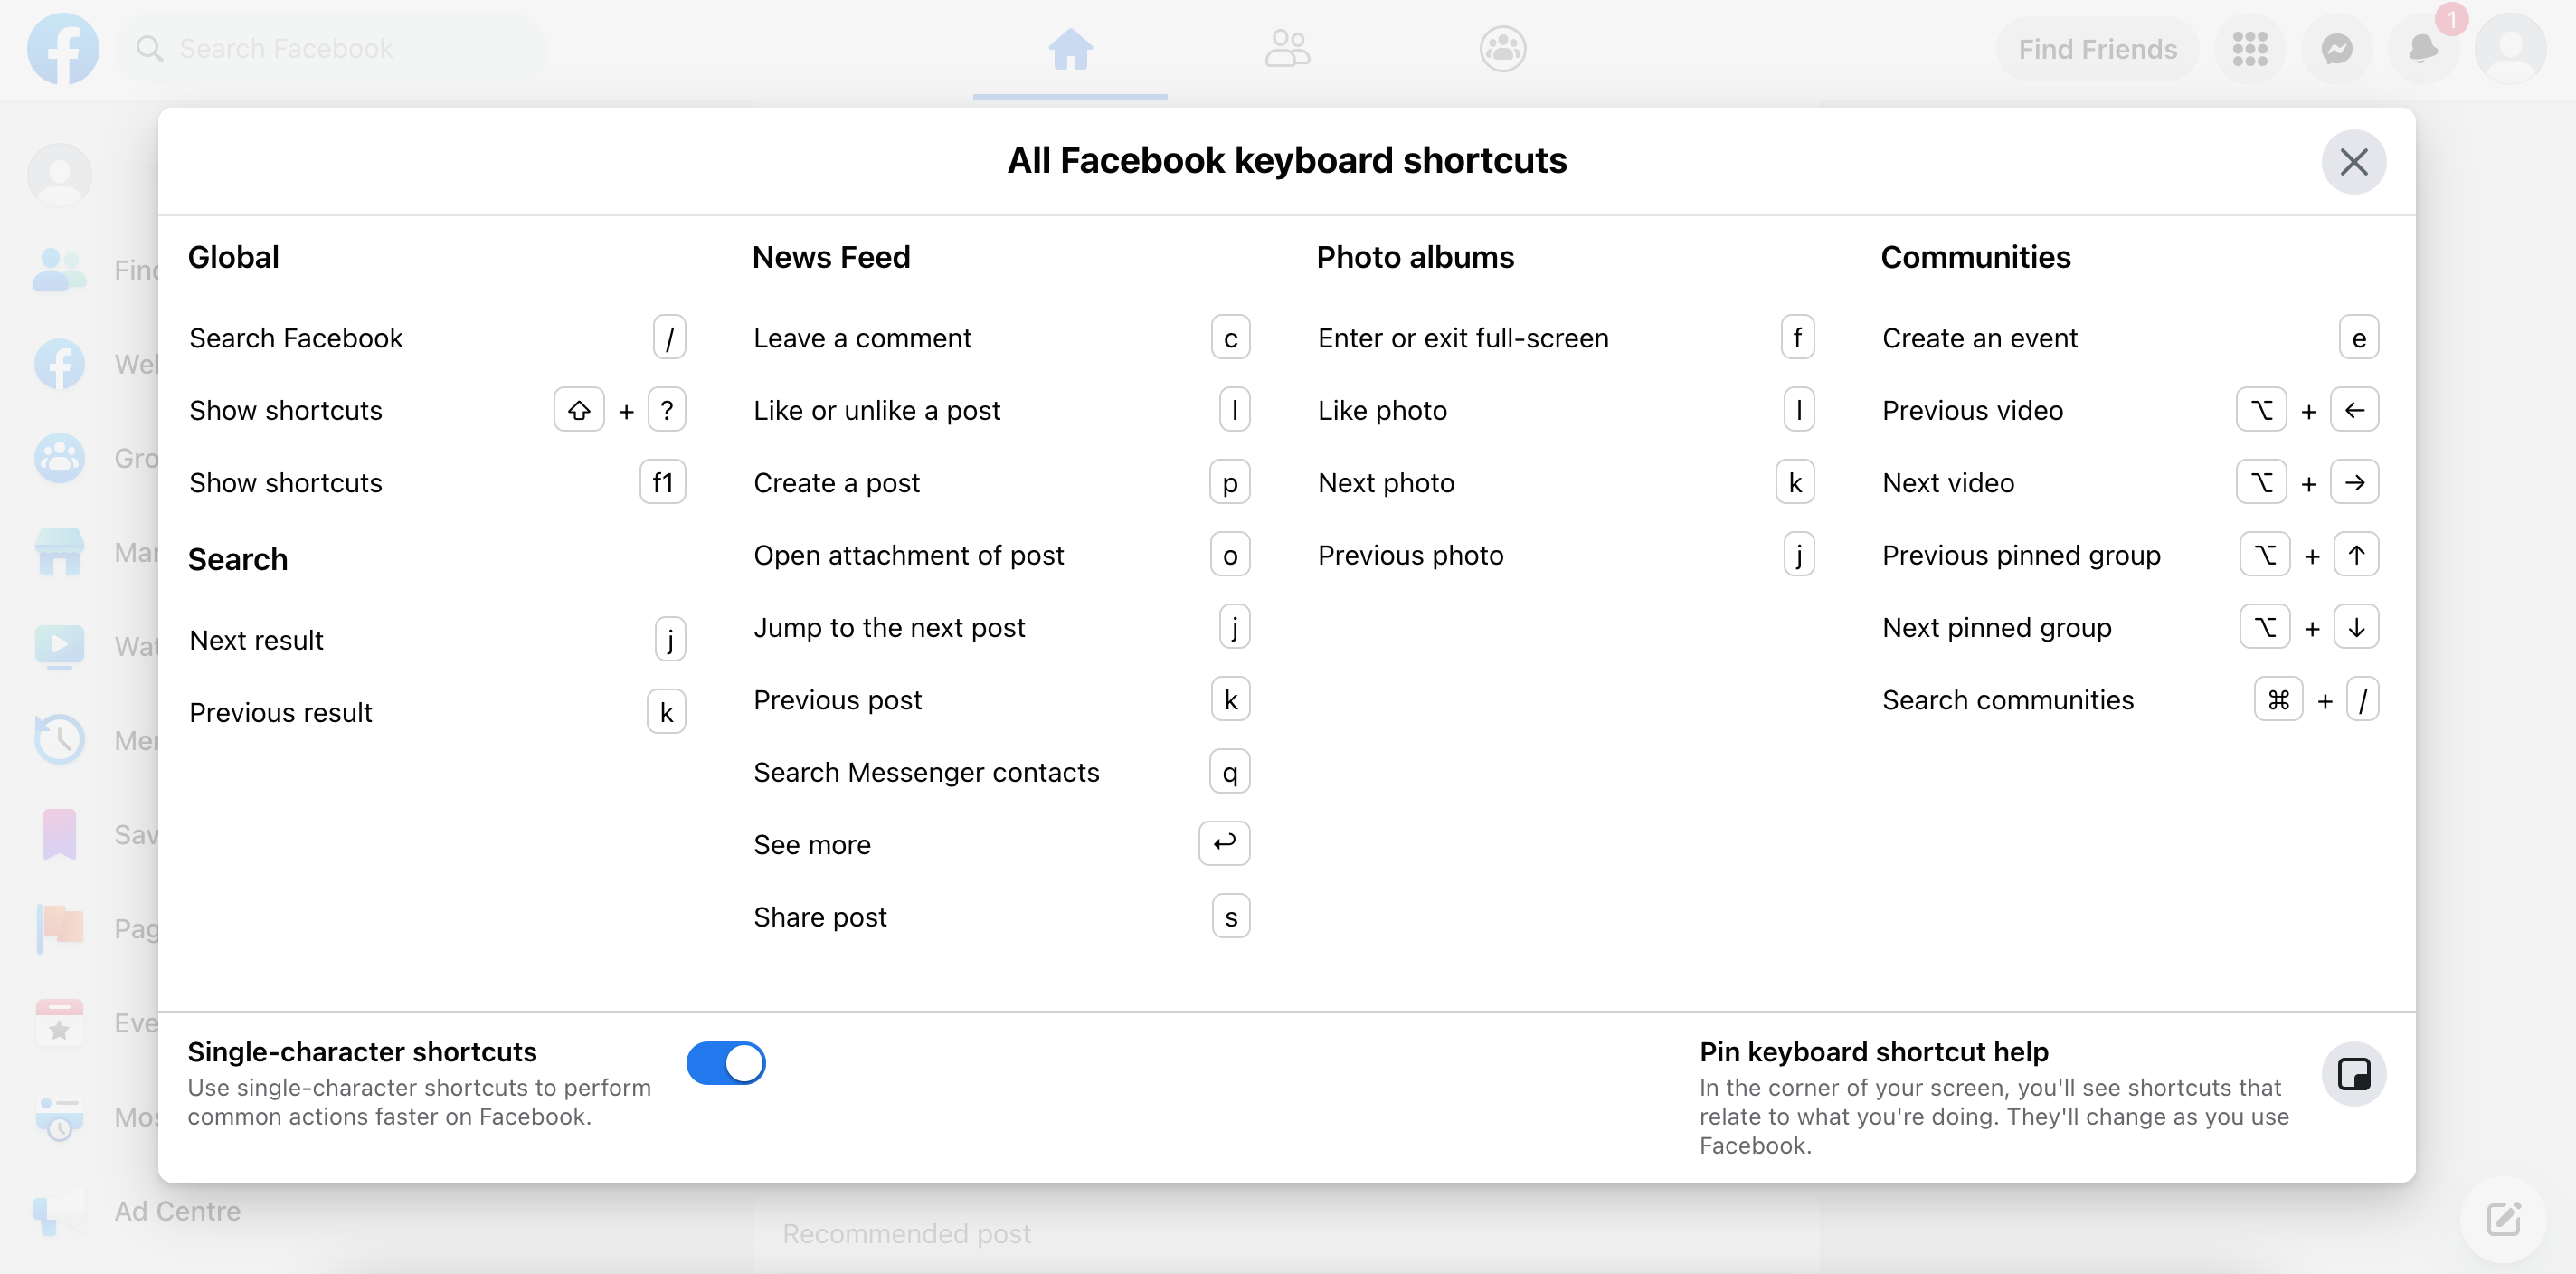 Facebook news feed shortcuts